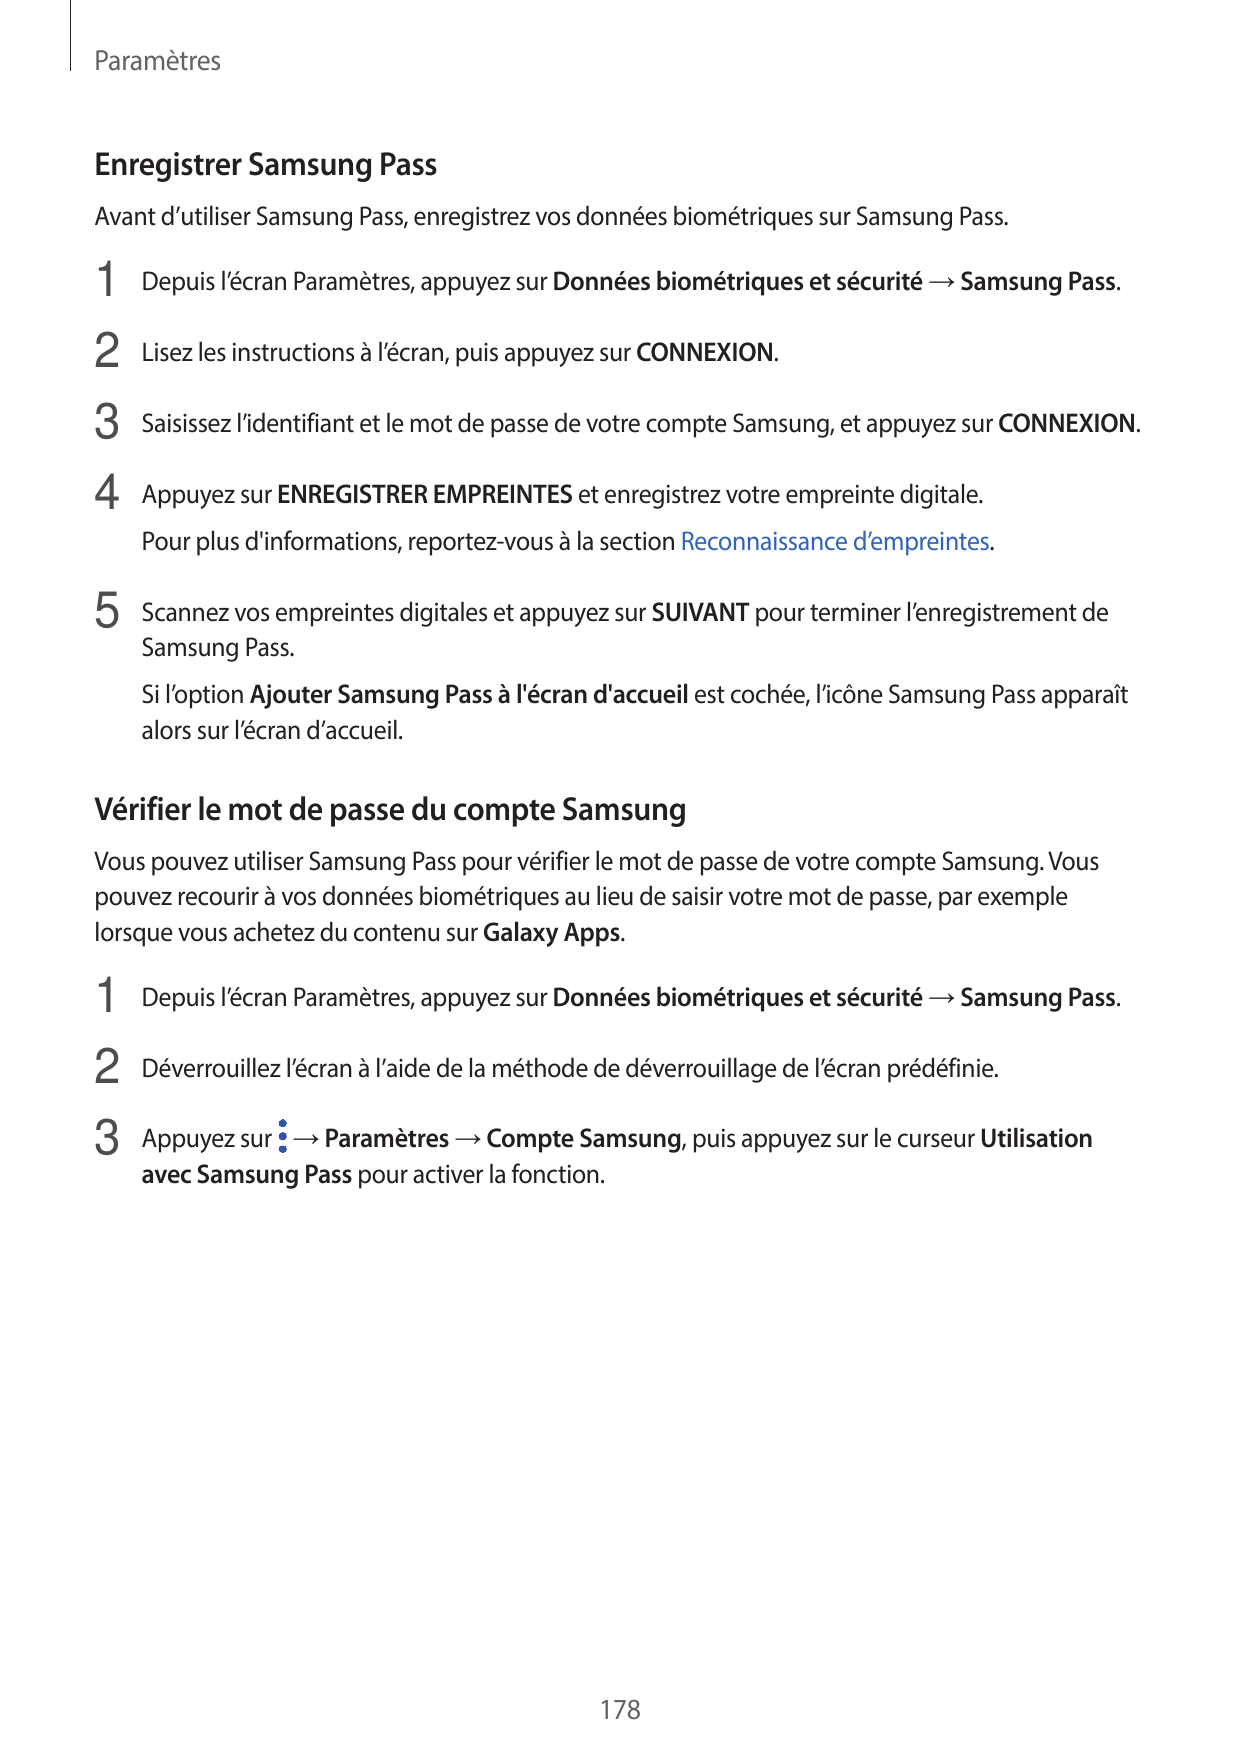 ParamètresEnregistrer Samsung PassAvant d’utiliser Samsung Pass, enregistrez vos données biométriques sur Samsung Pass.1 Depuis 